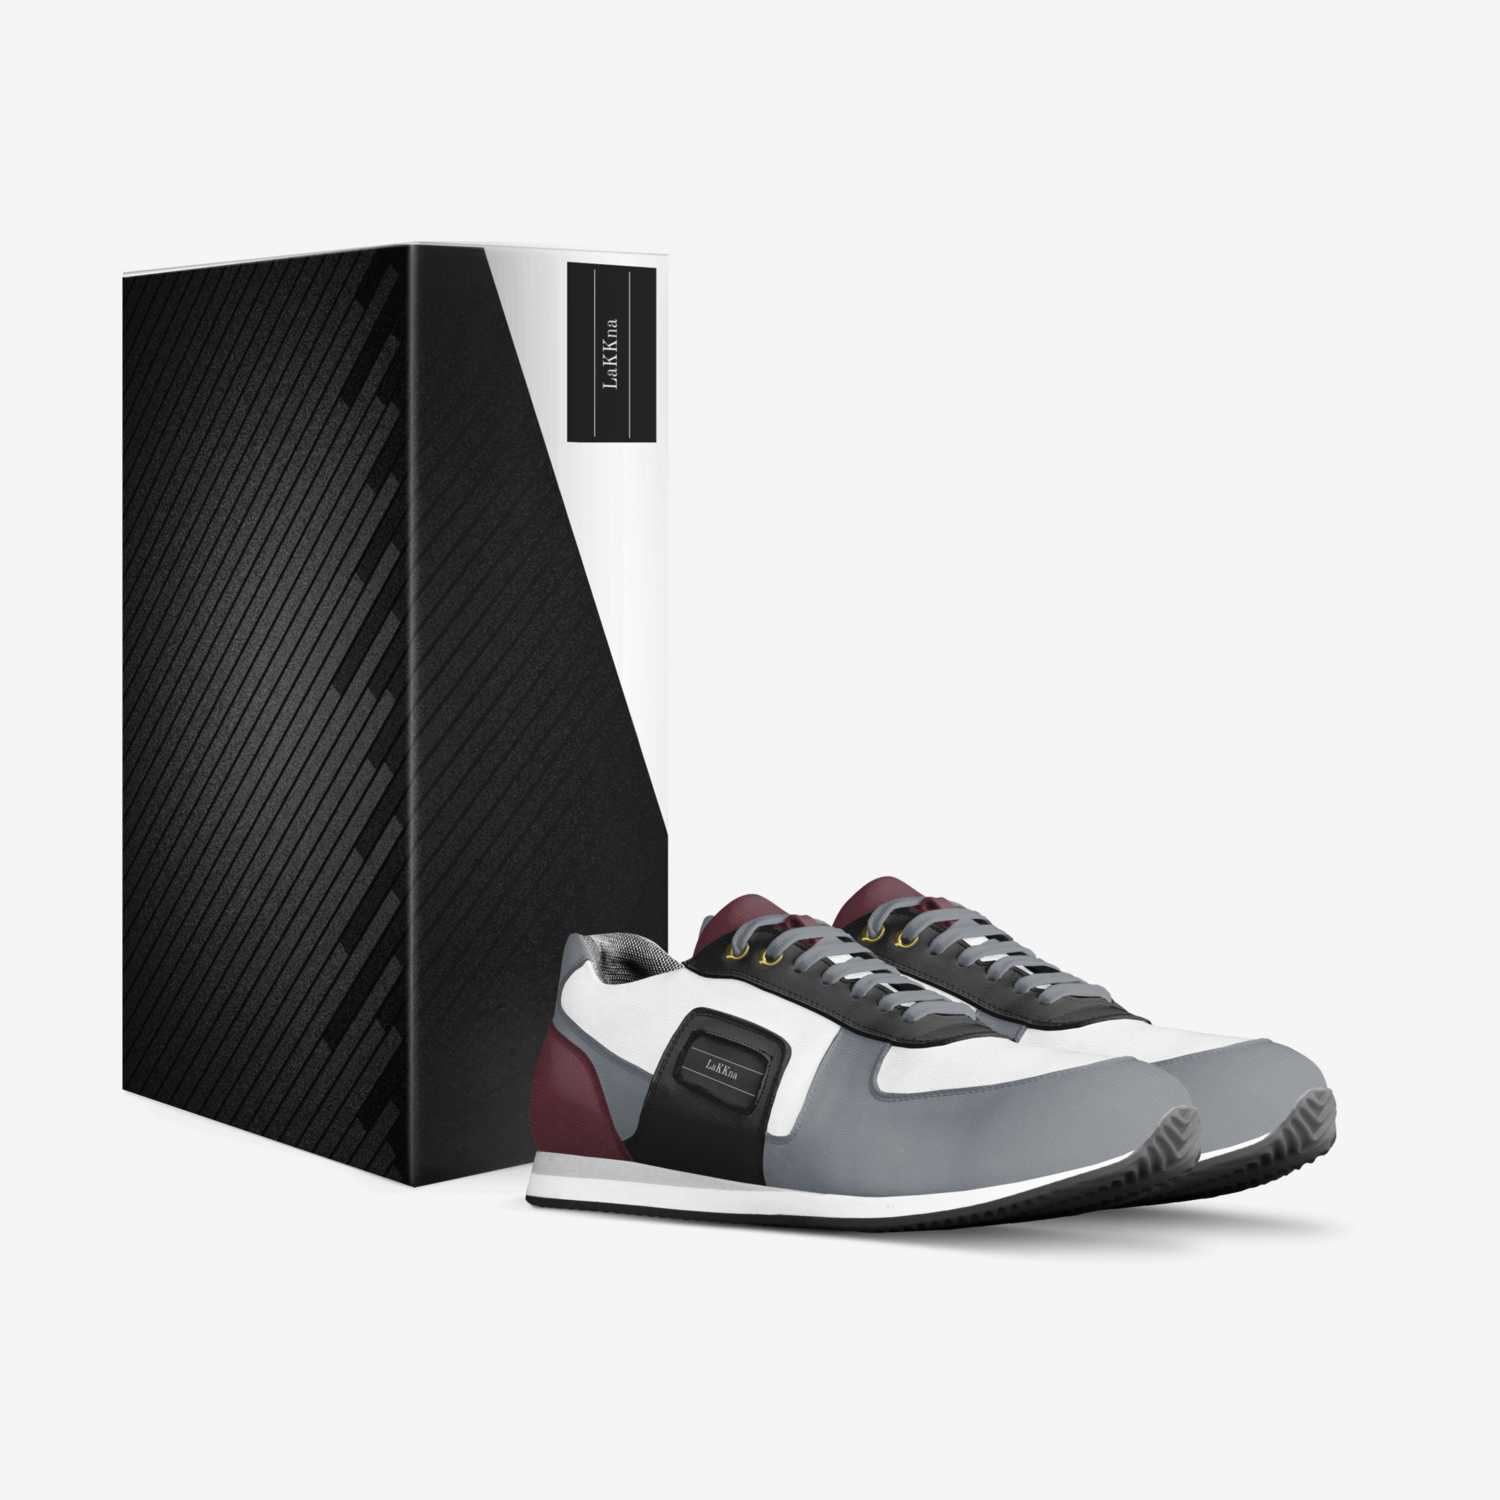 LaKKna custom made in Italy shoes by Rizah | Box view